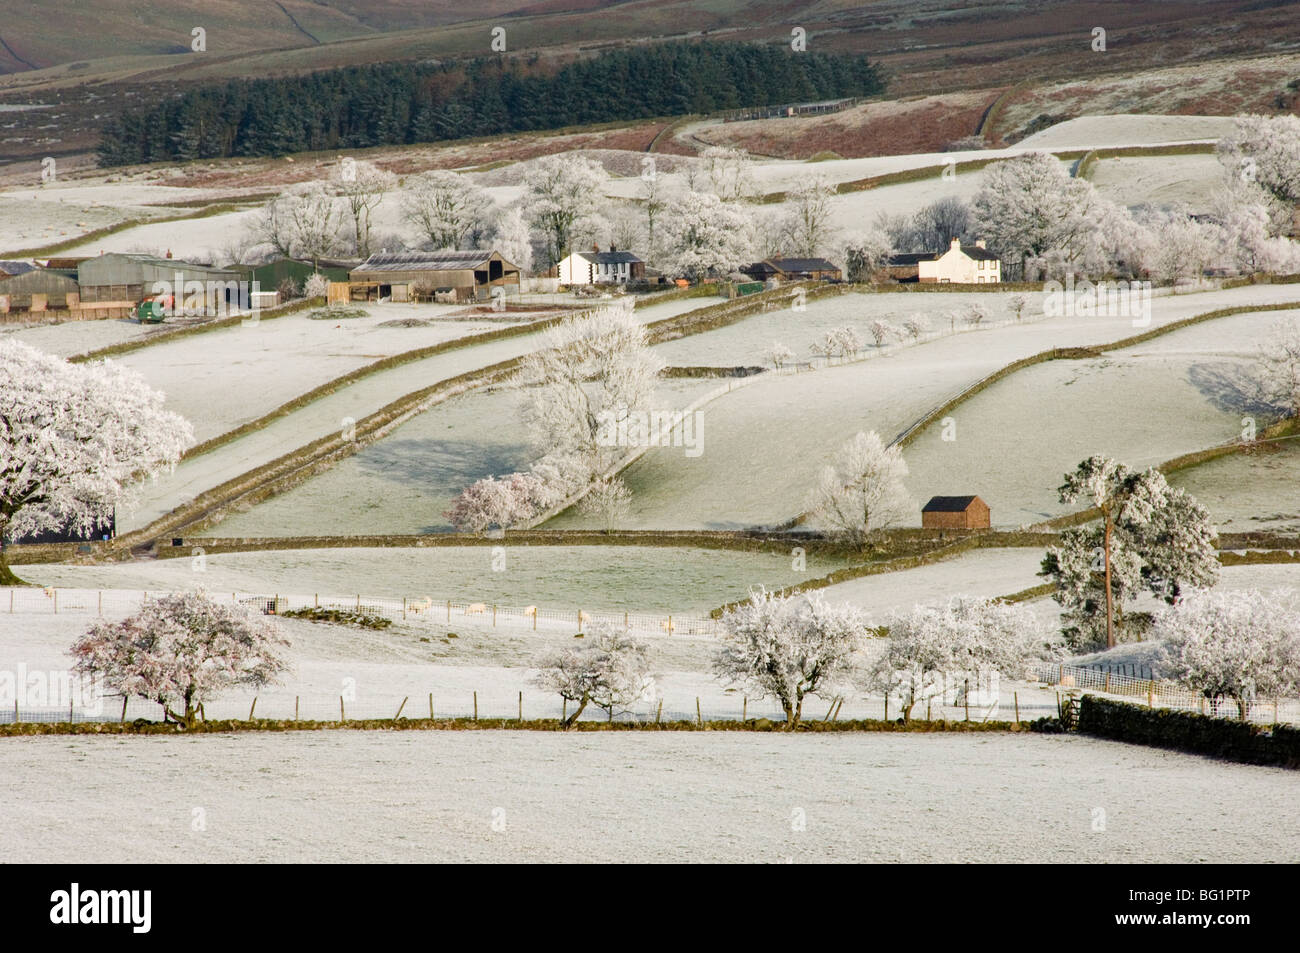 Farm community, the Pennines in winter, Cumbria, England, United Kingdom, Europe Stock Photo